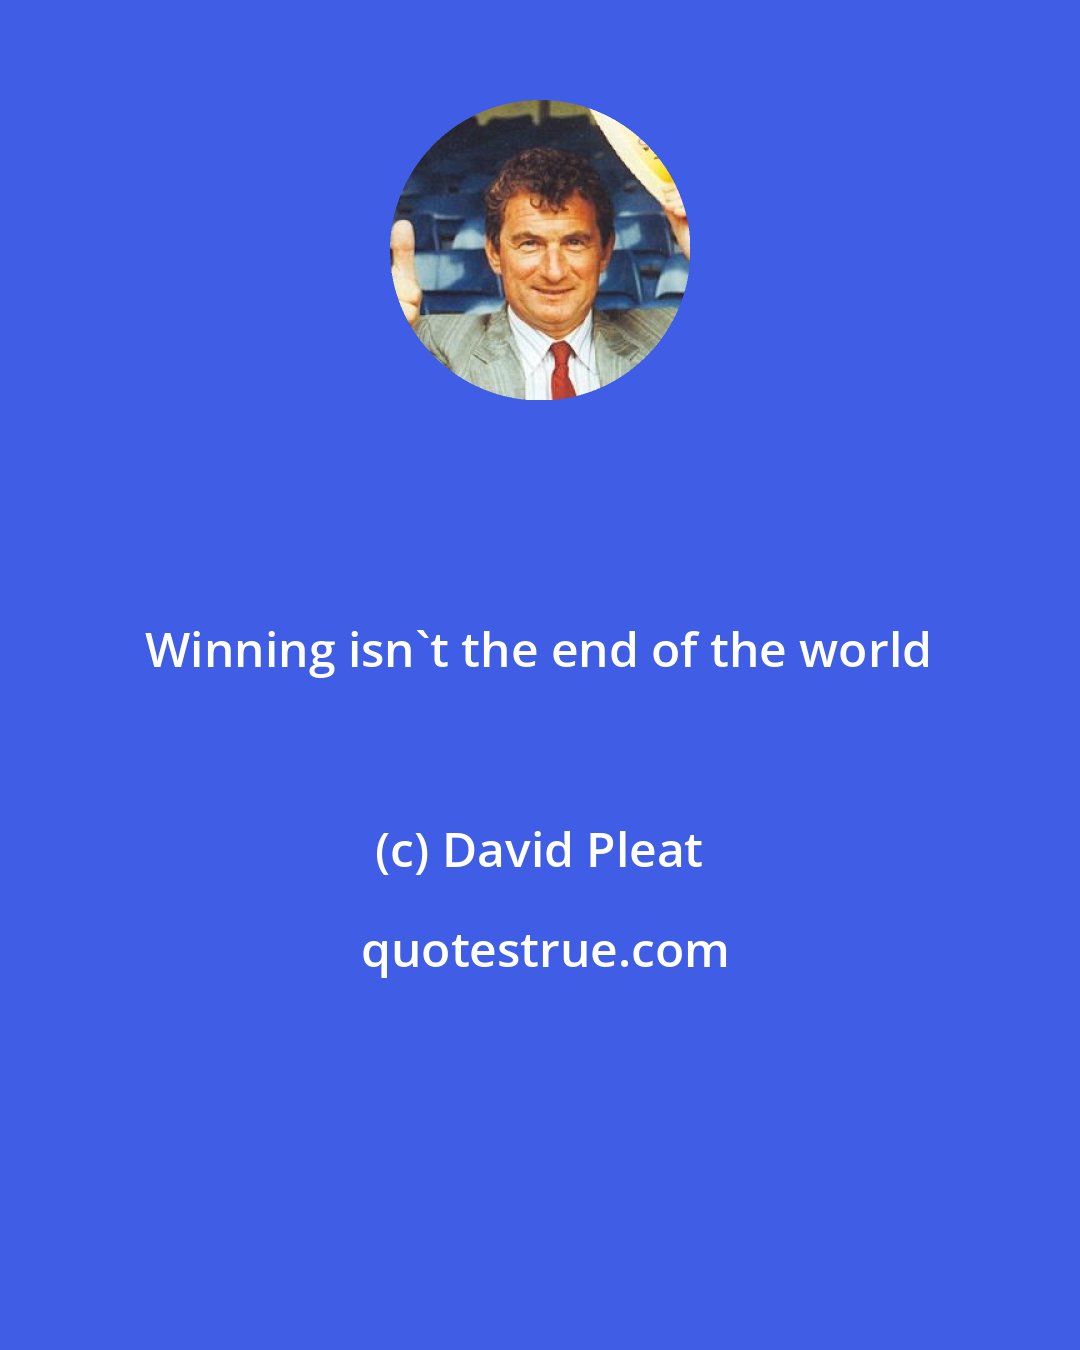 David Pleat: Winning isn't the end of the world